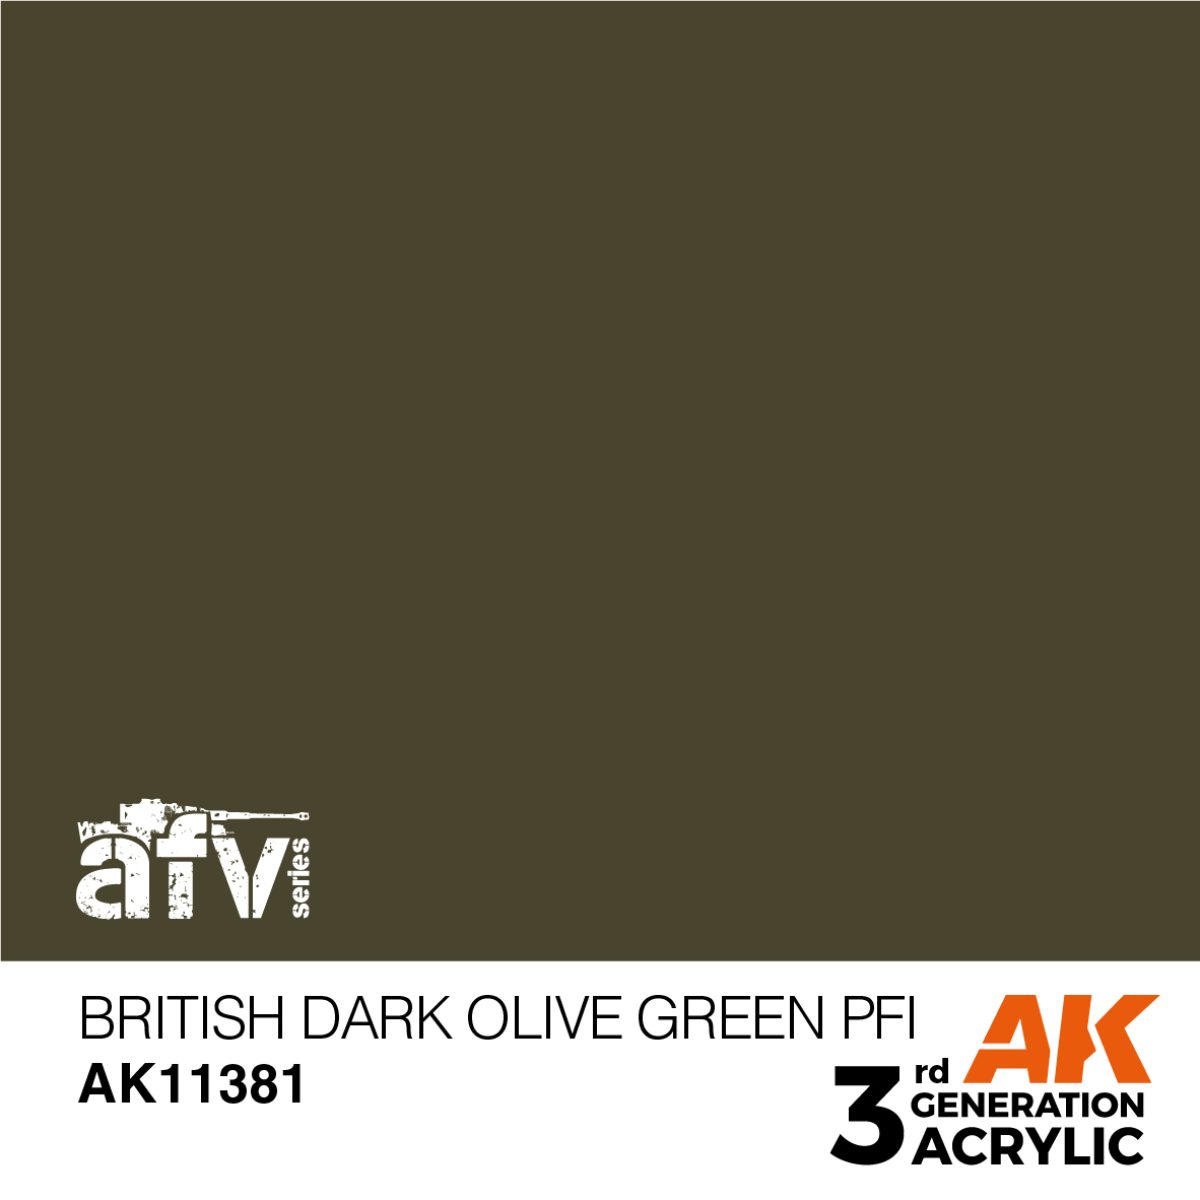 Buy British Dark Olive Green PFI online for 2,75€